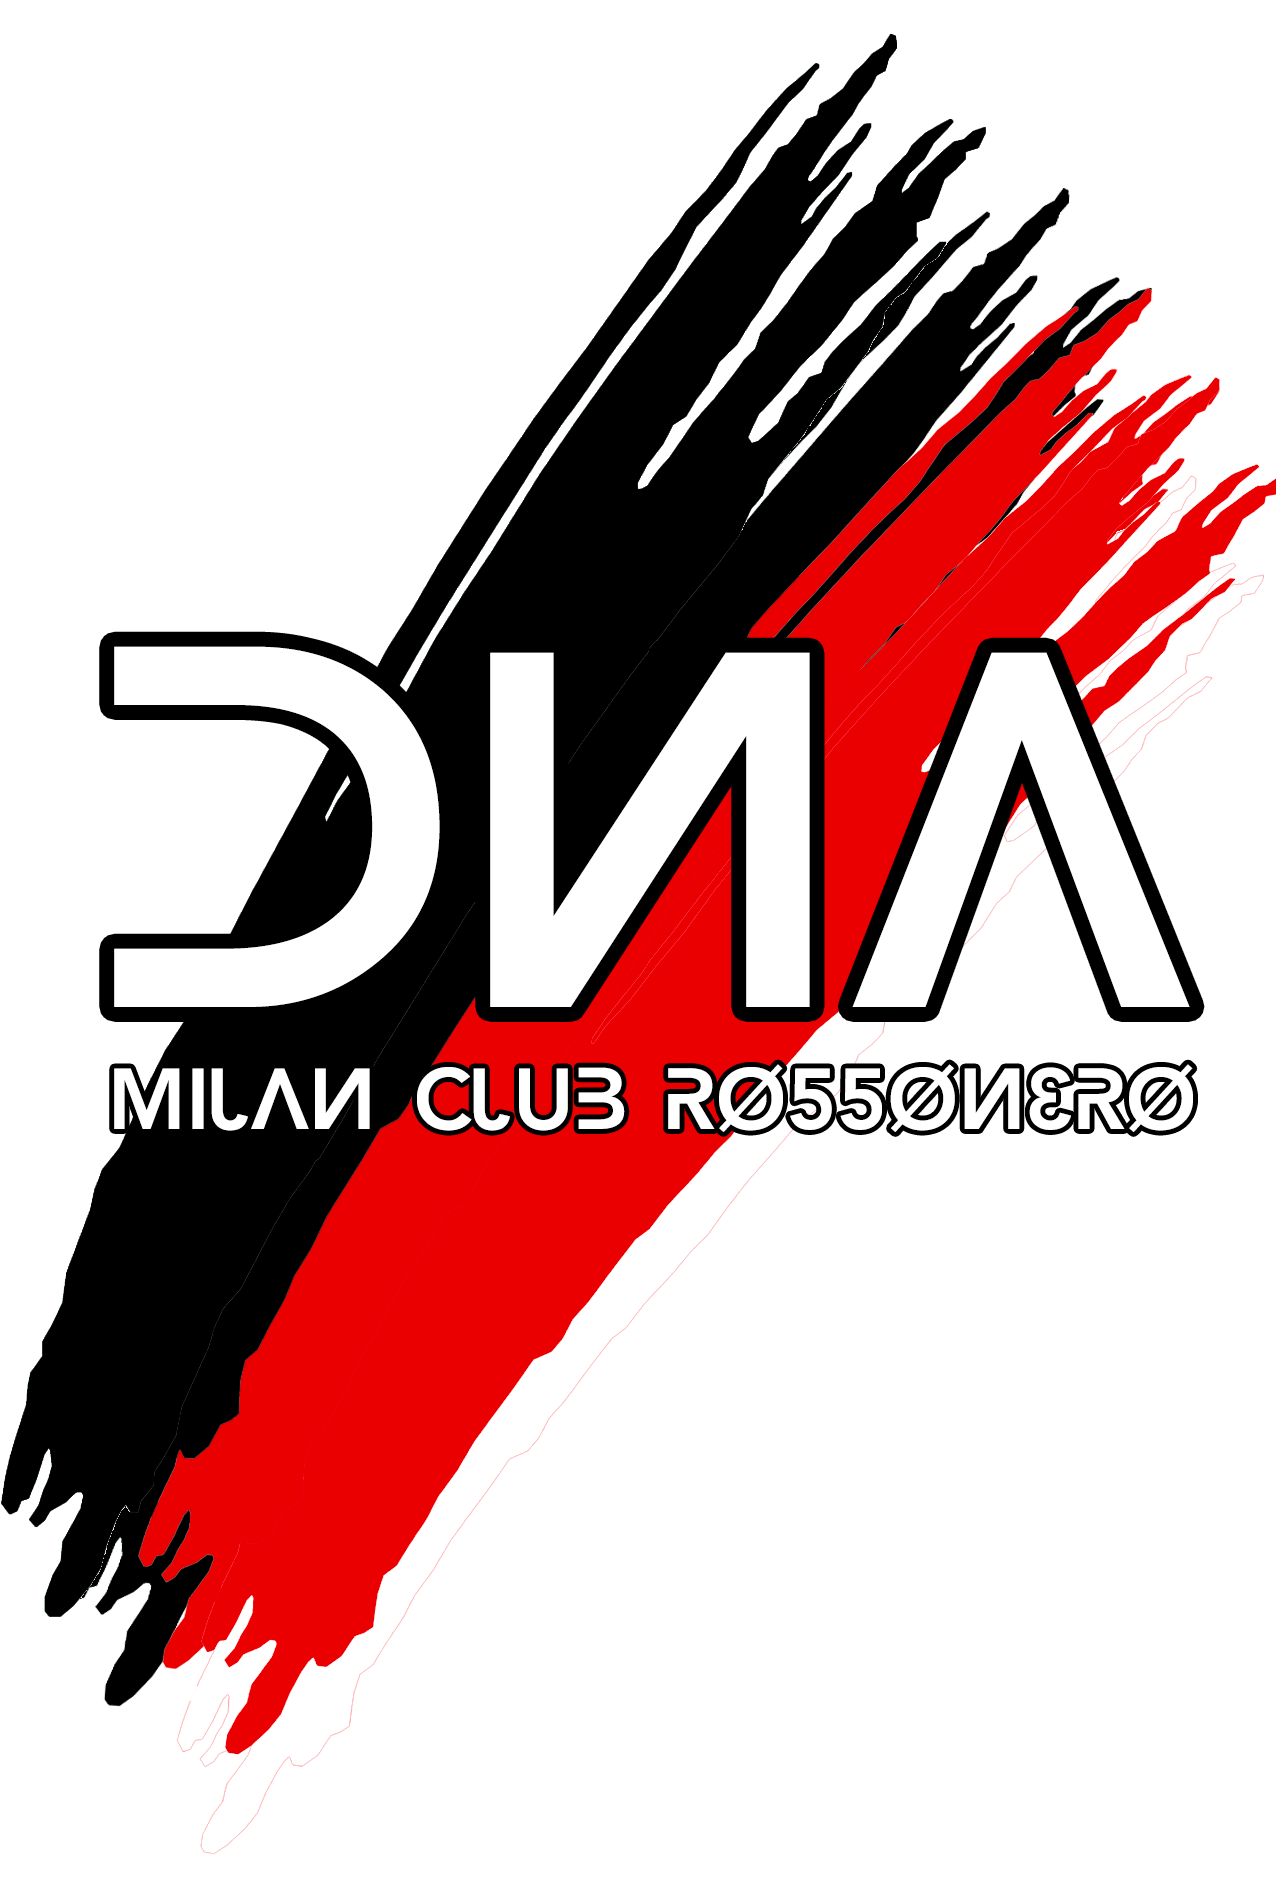 DNA Rossonero - Milan Club